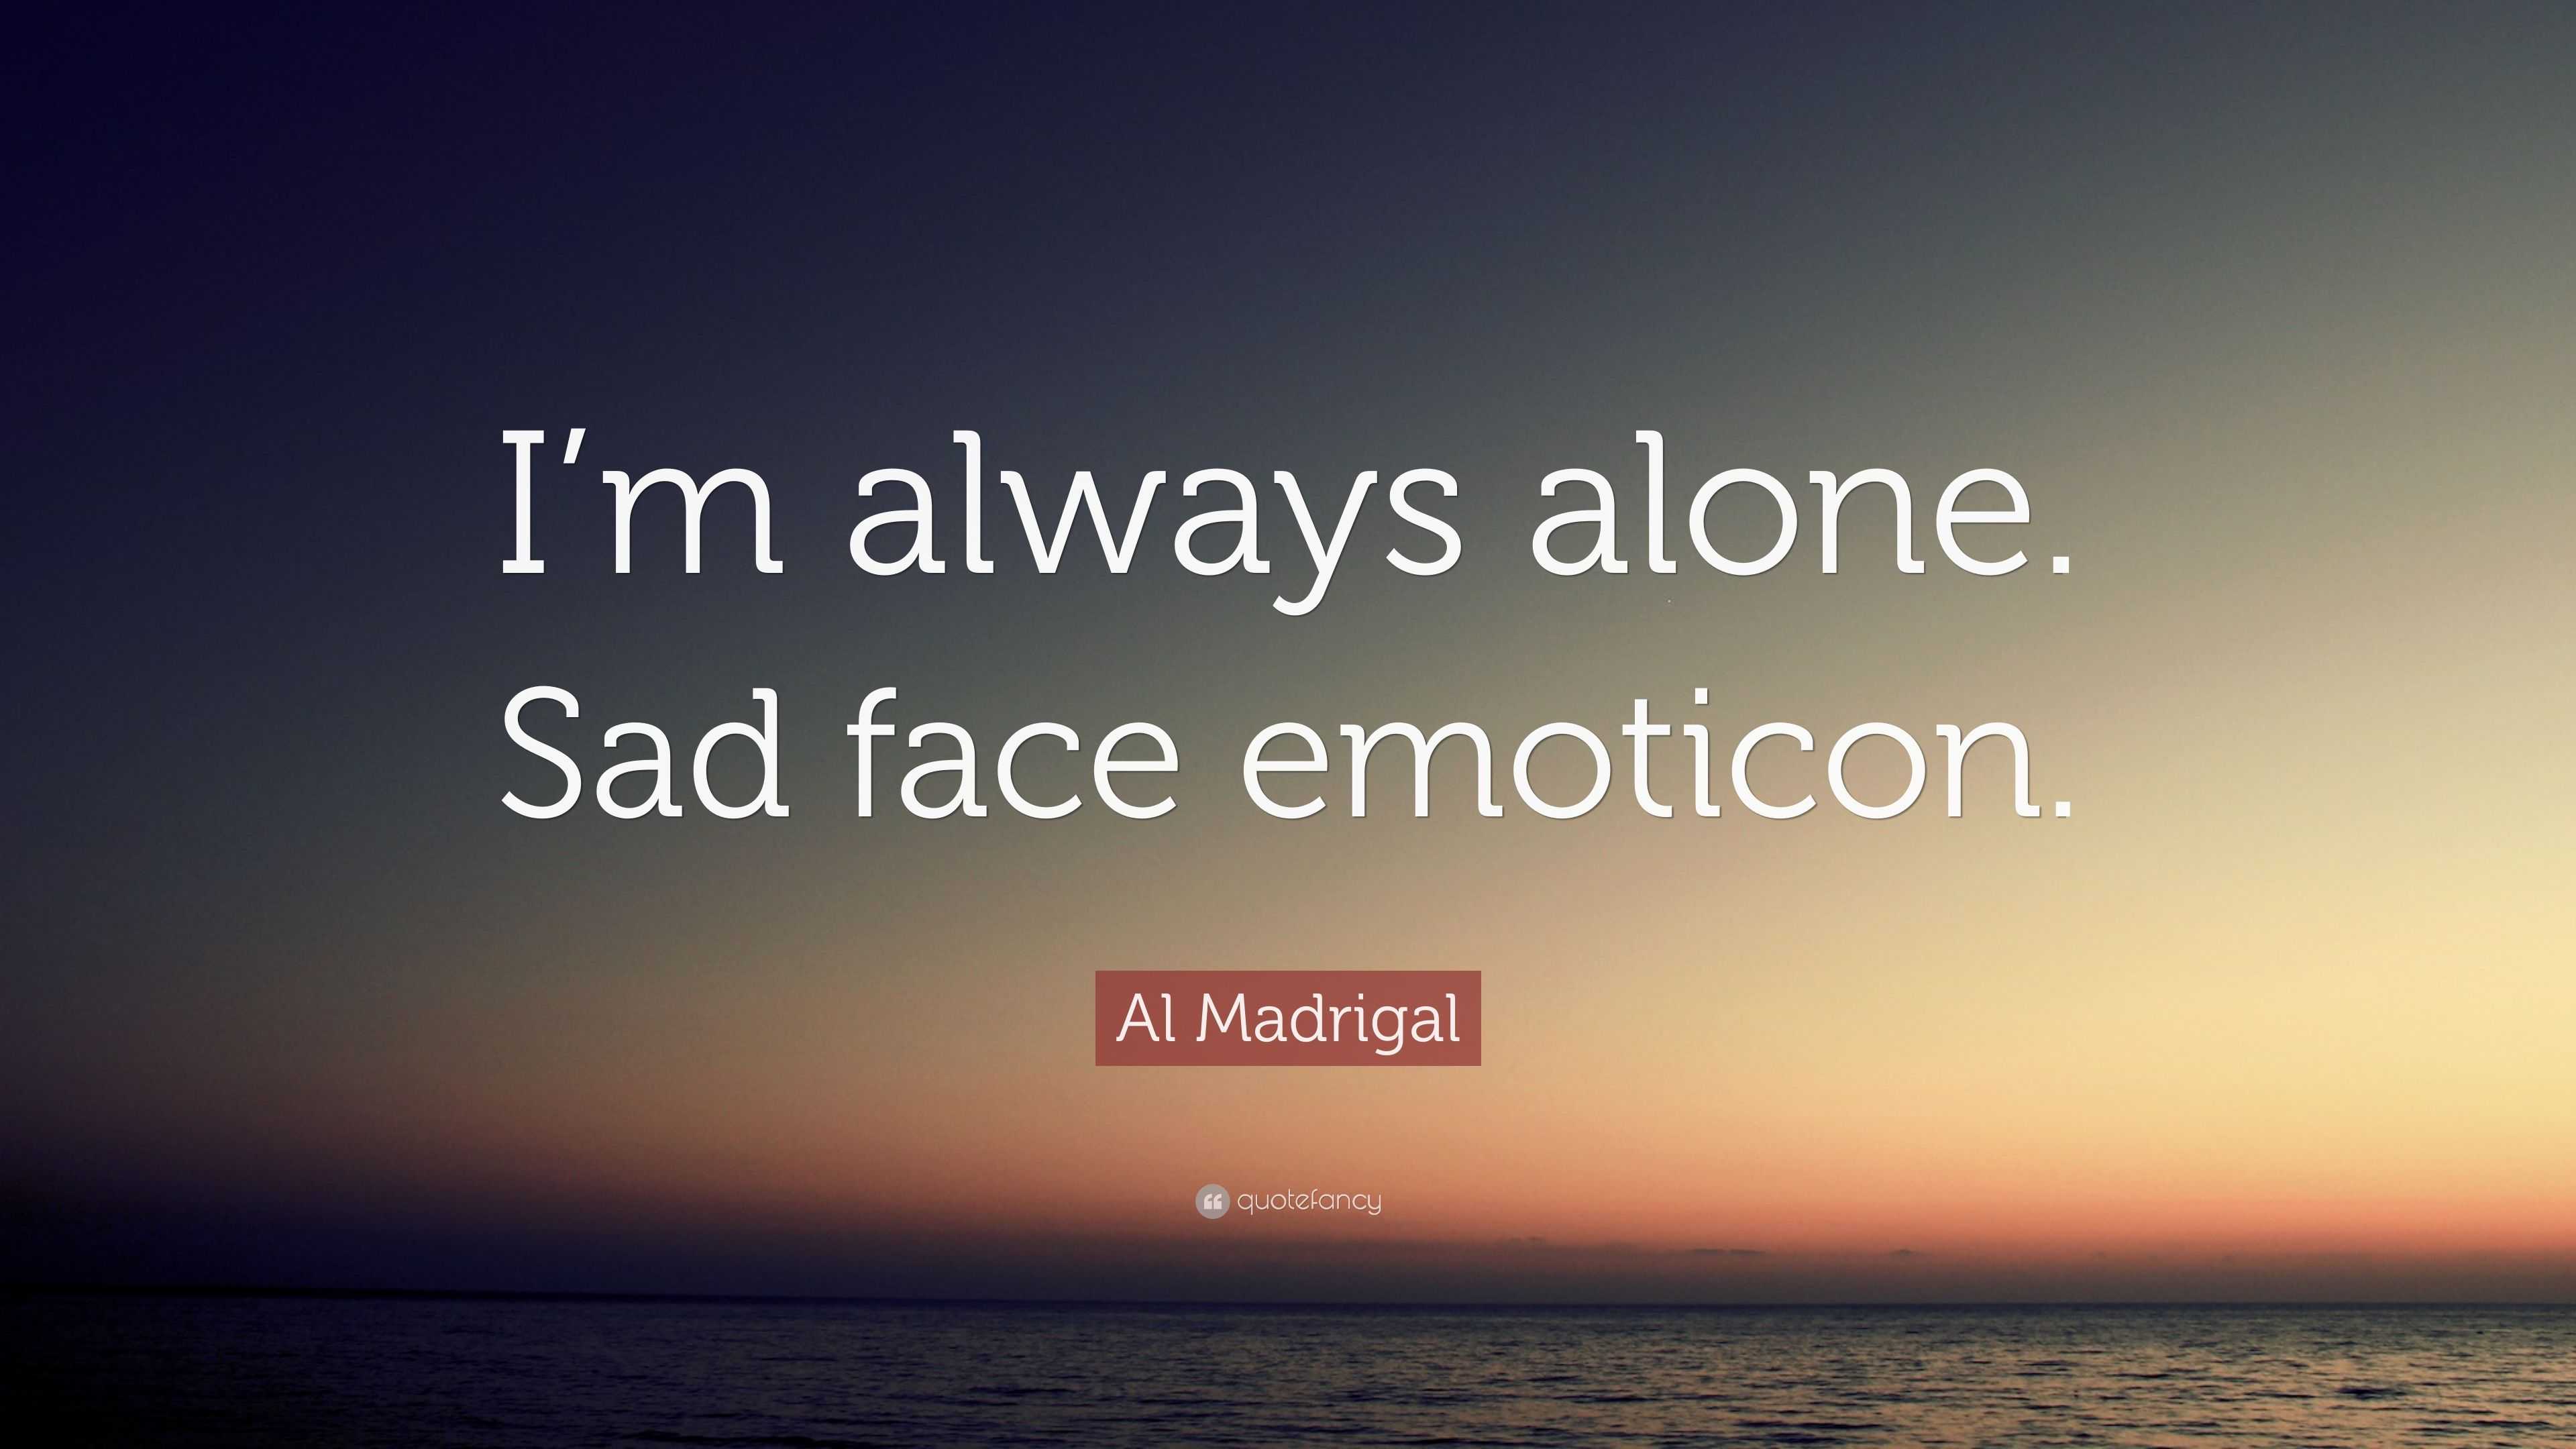 Al Madrigal Quote: "I'm always alone. Sad face emoticon."